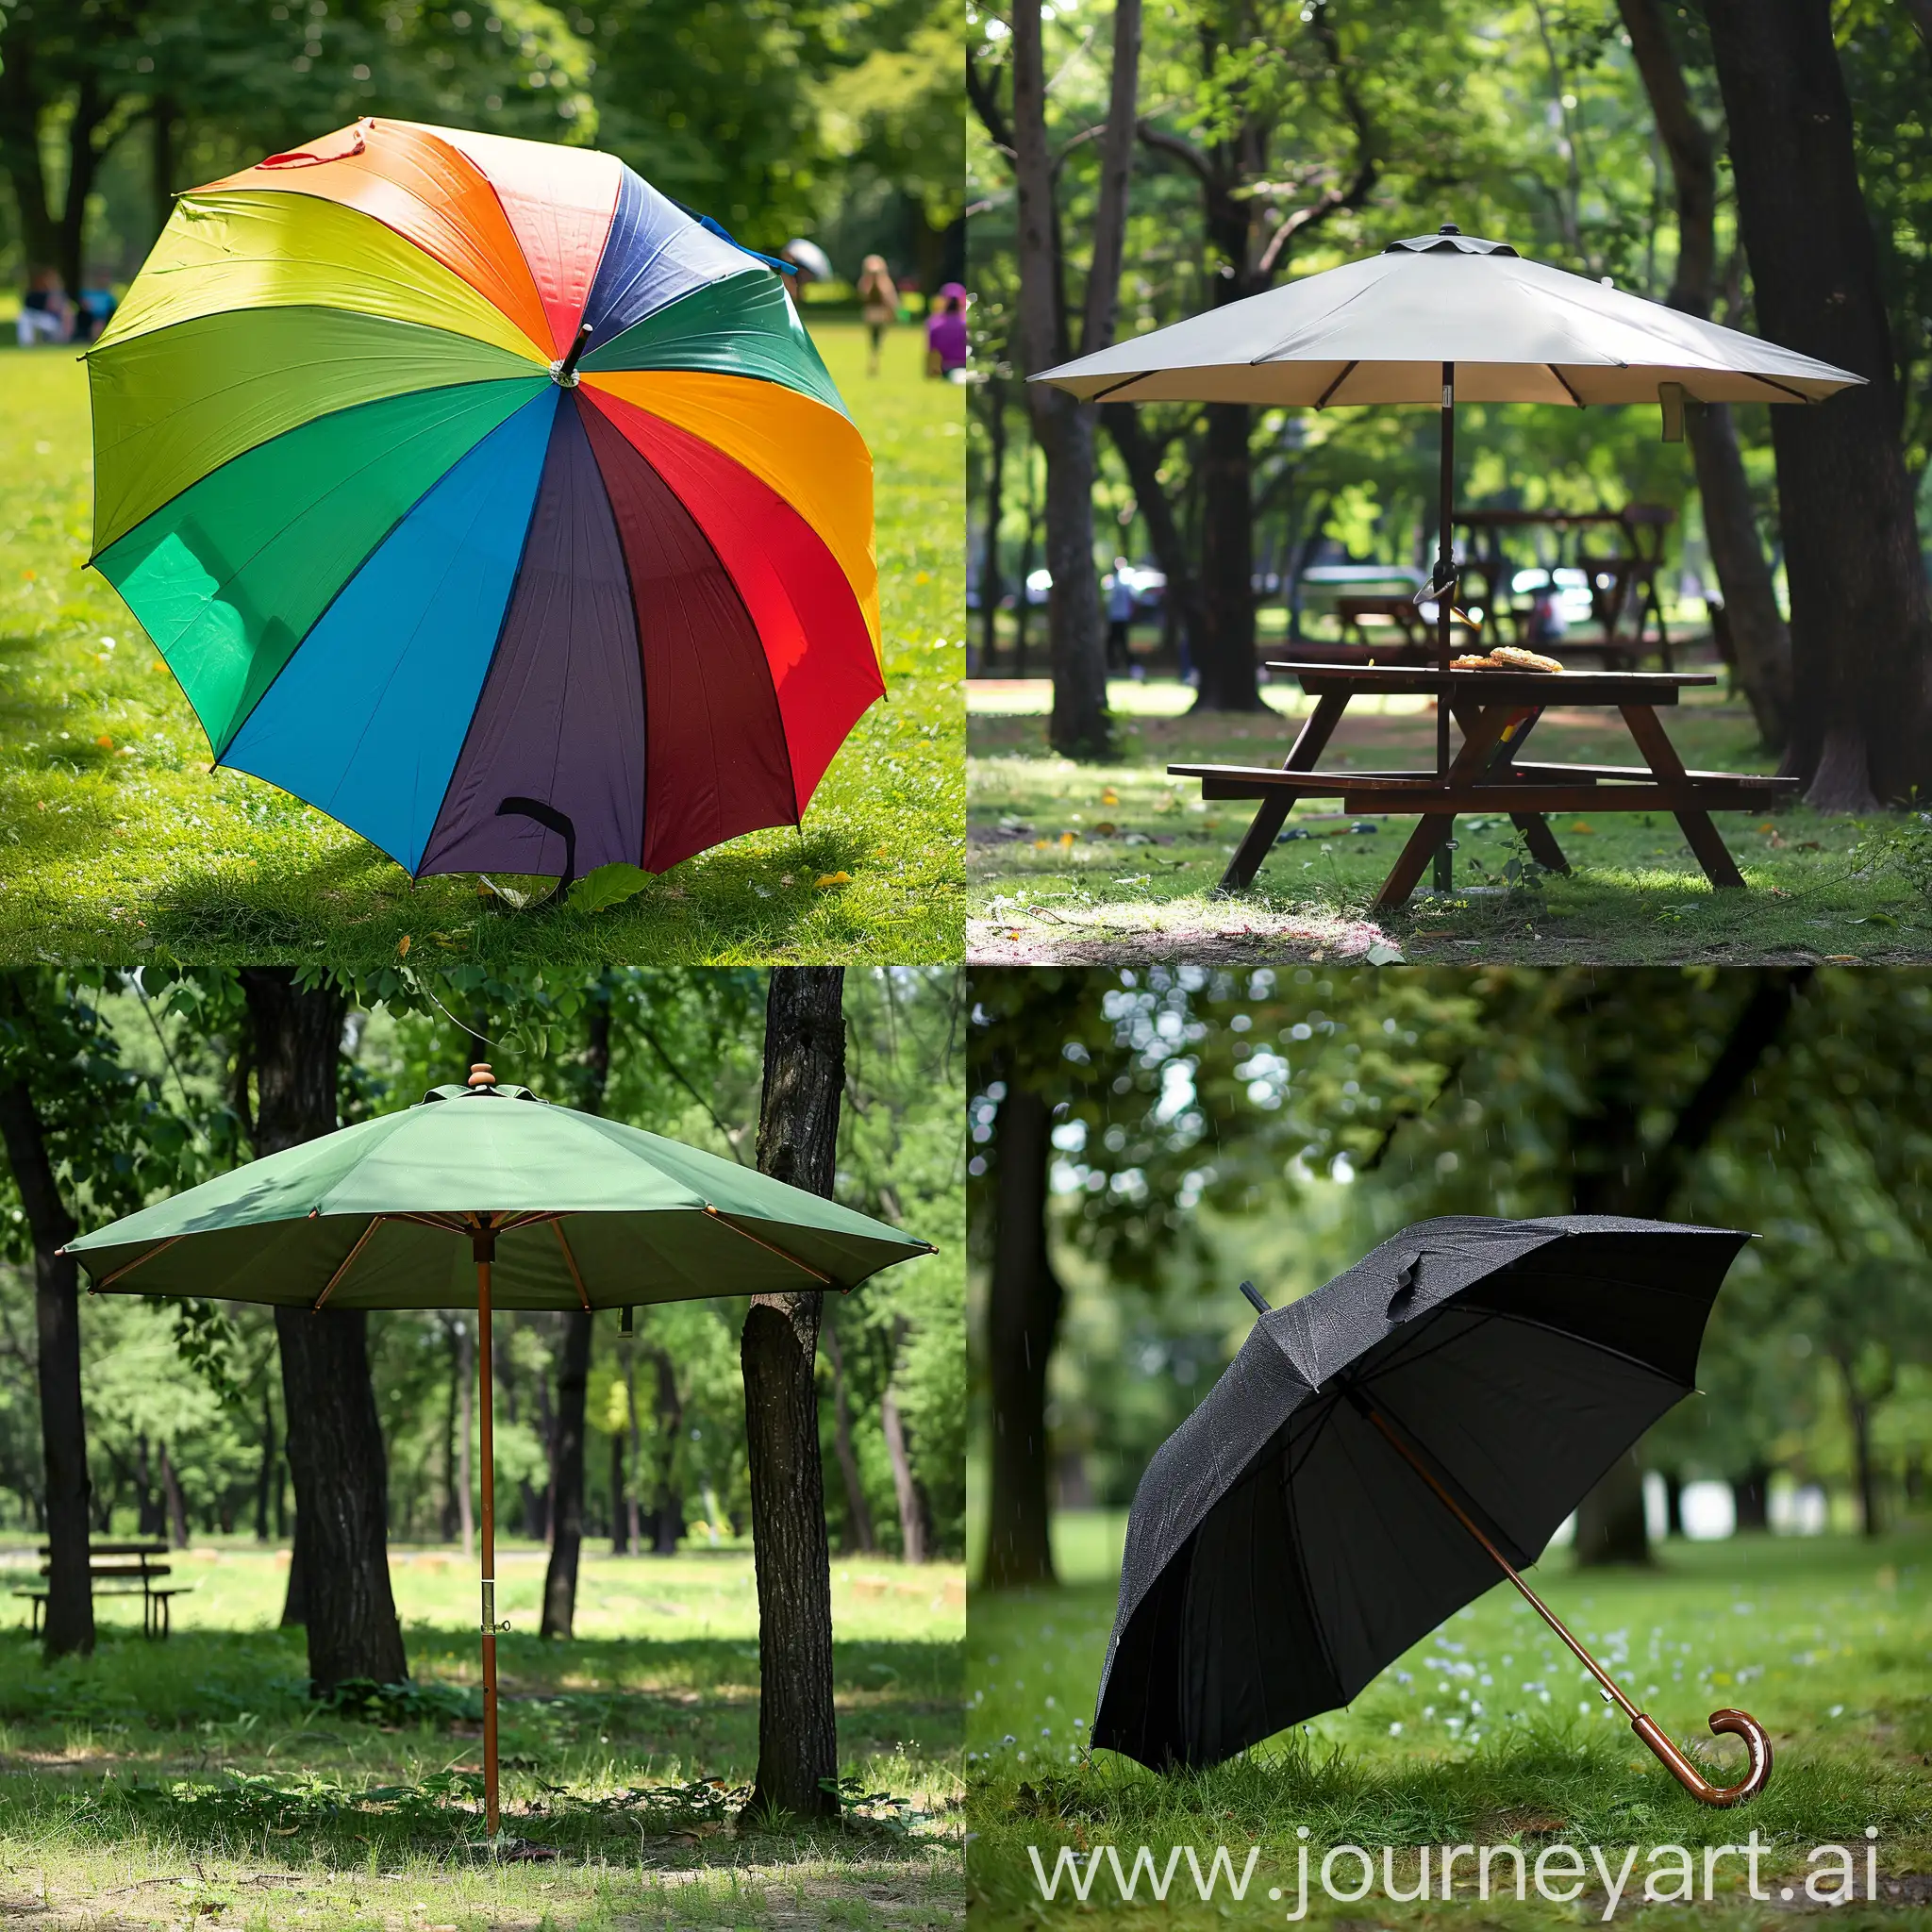 Vibrant-Umbrella-Trading-Scene-in-the-Park